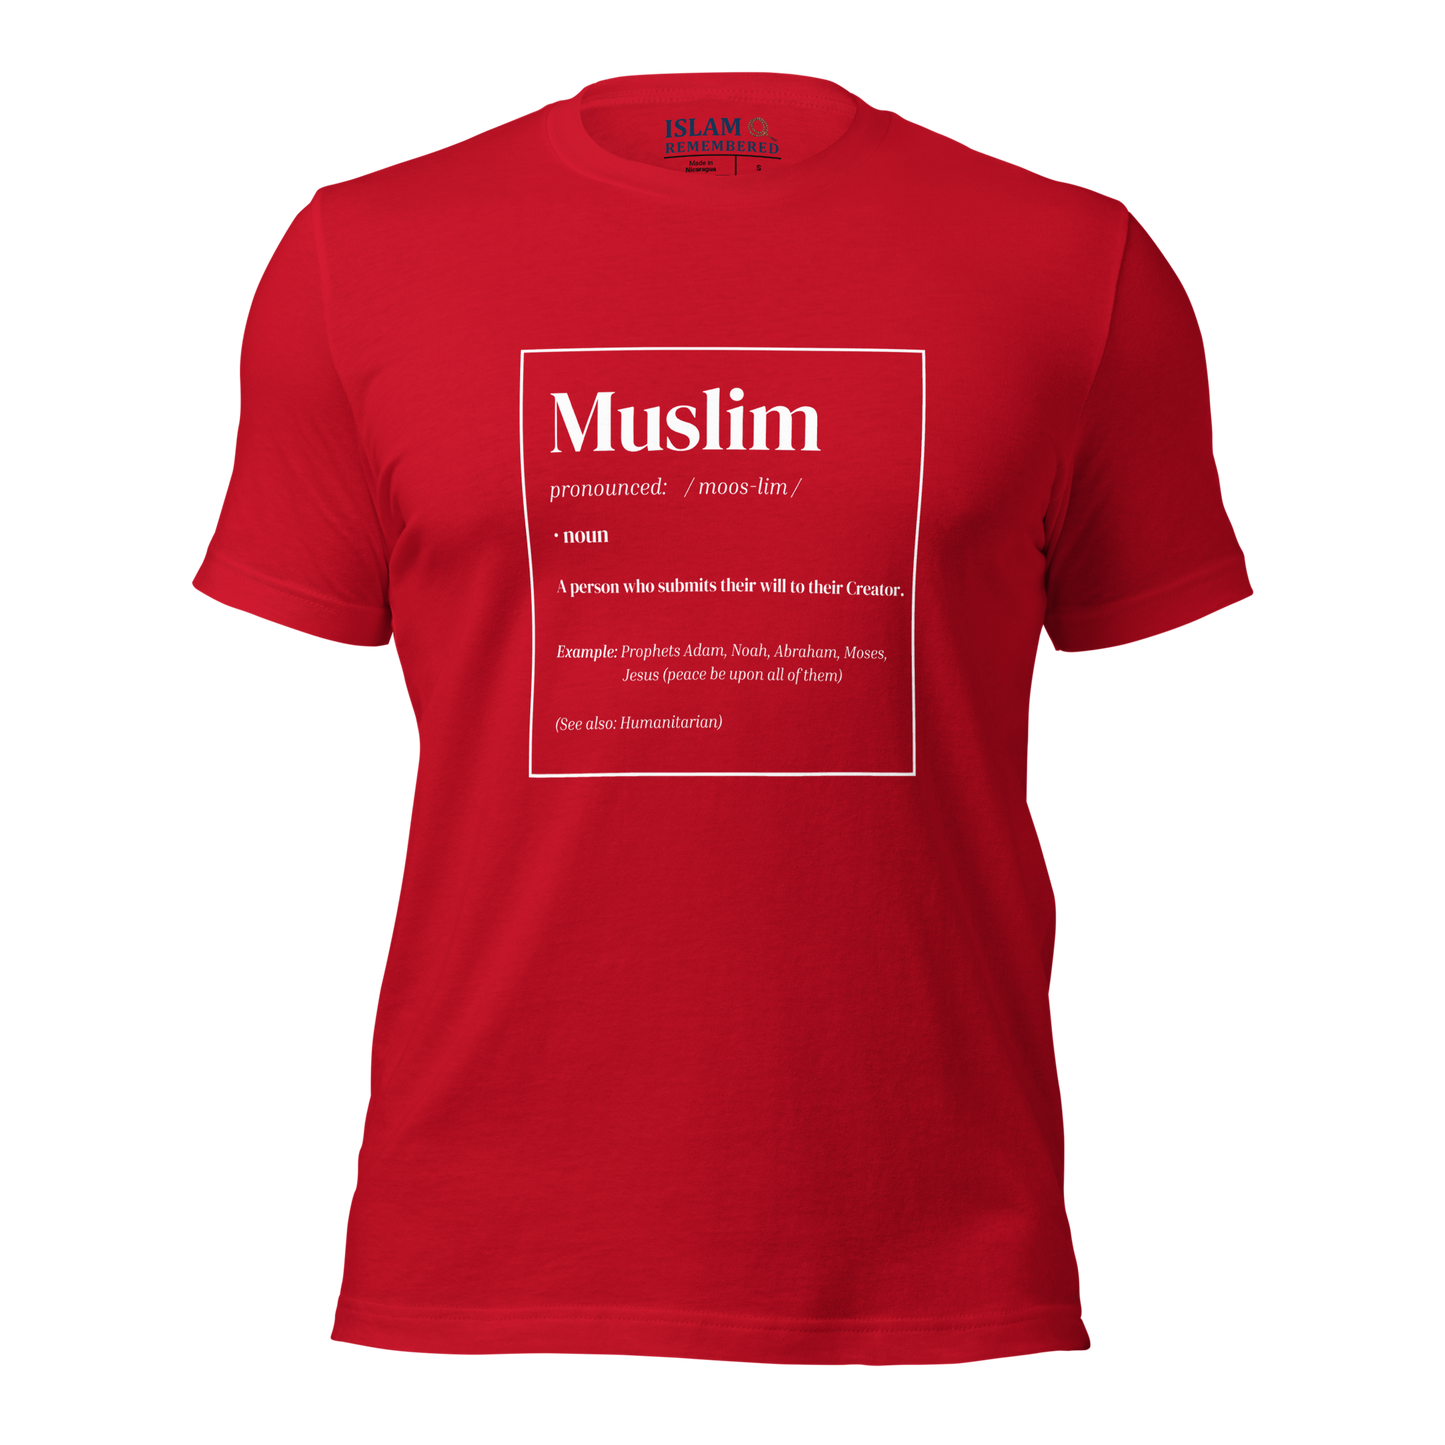 ADULT T-Shirt - MUSLIM DEFINITION - White